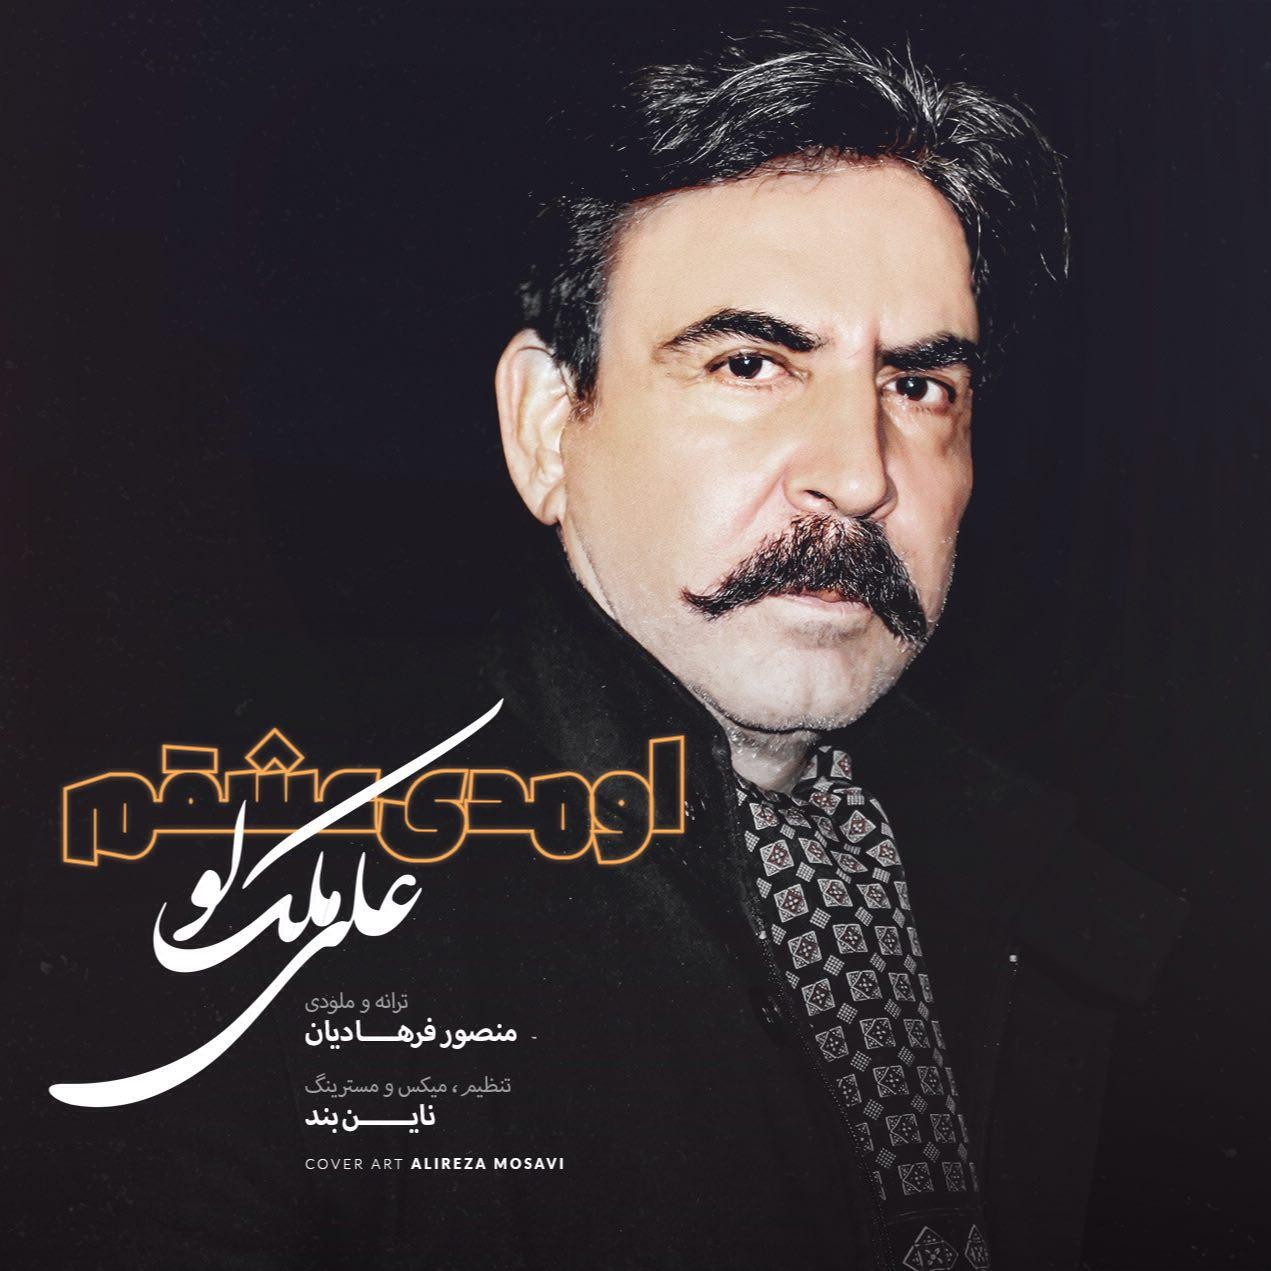  دانلود آهنگ جدید على ملك لو - اومدى عشقم | Download New Music By Ali Malekloo - Omadi Eshgham